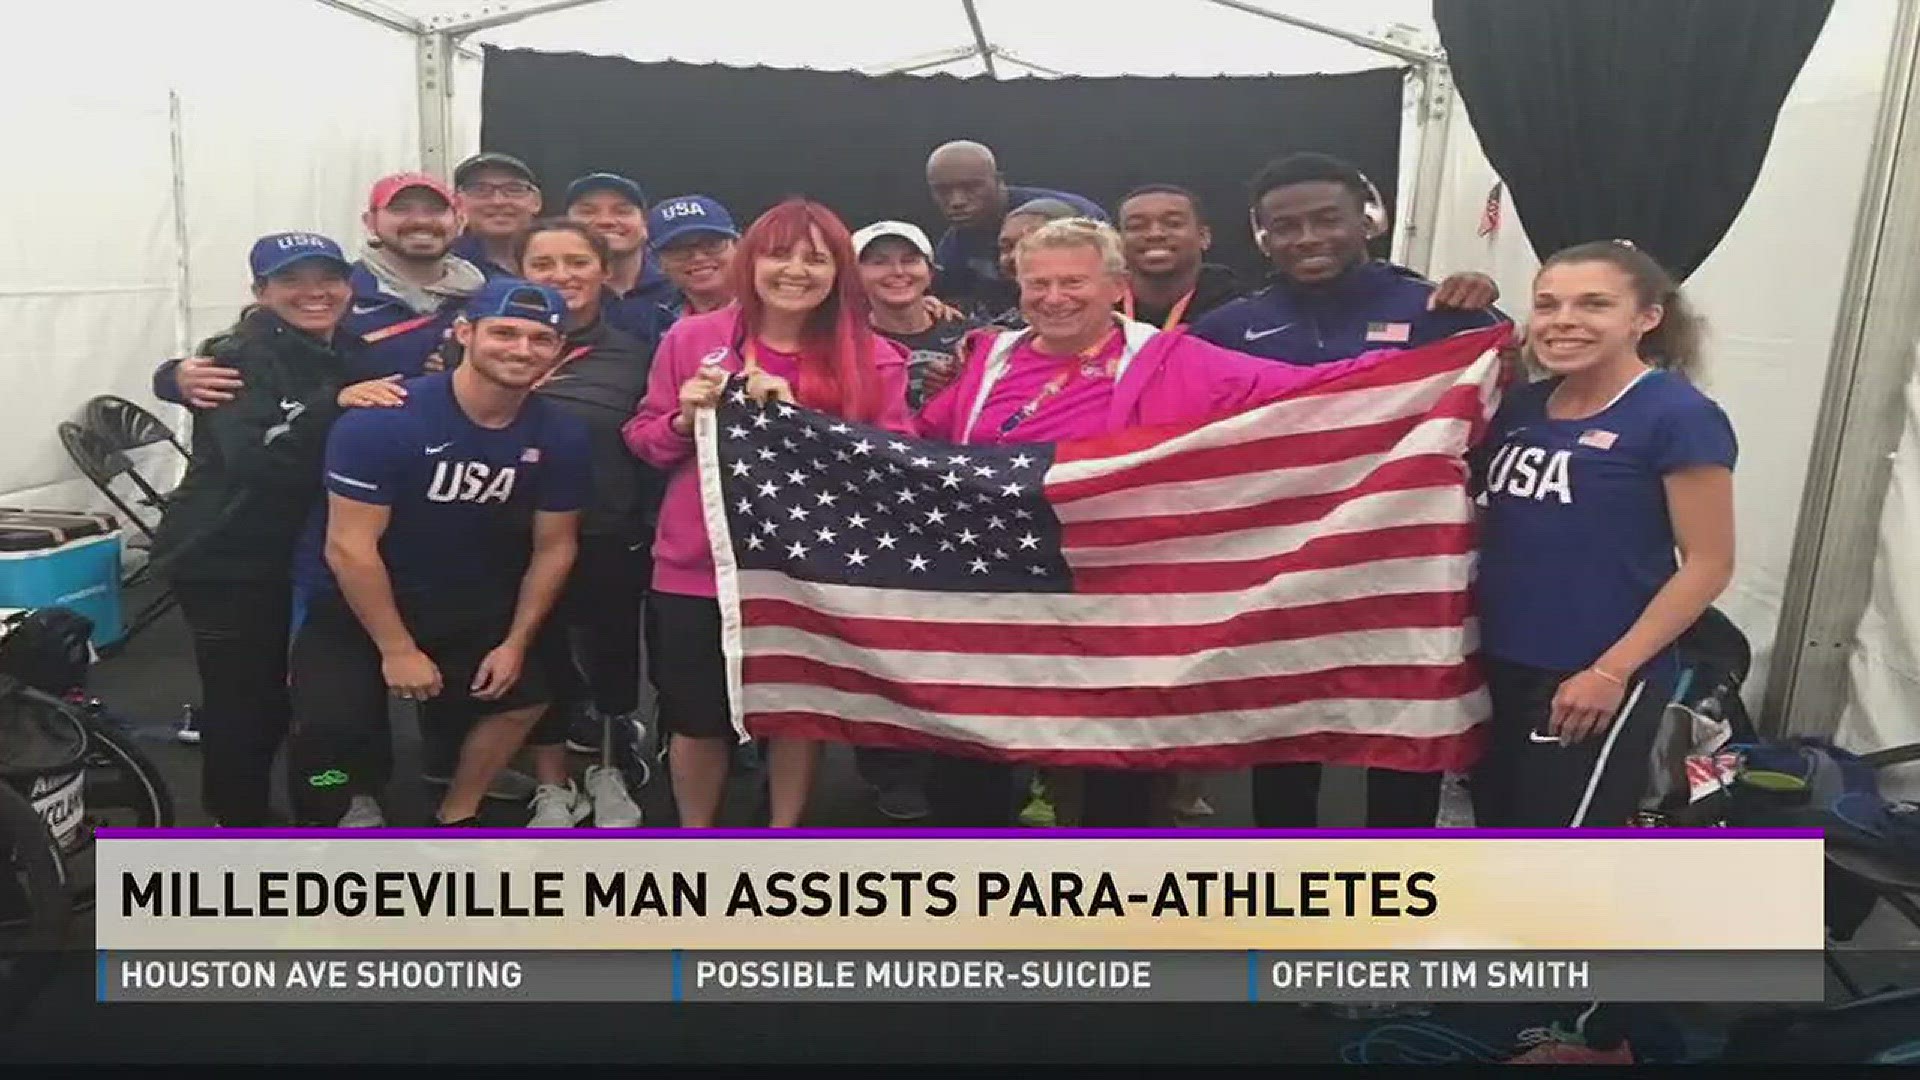 Milledgeville man helps para-athletes win gold